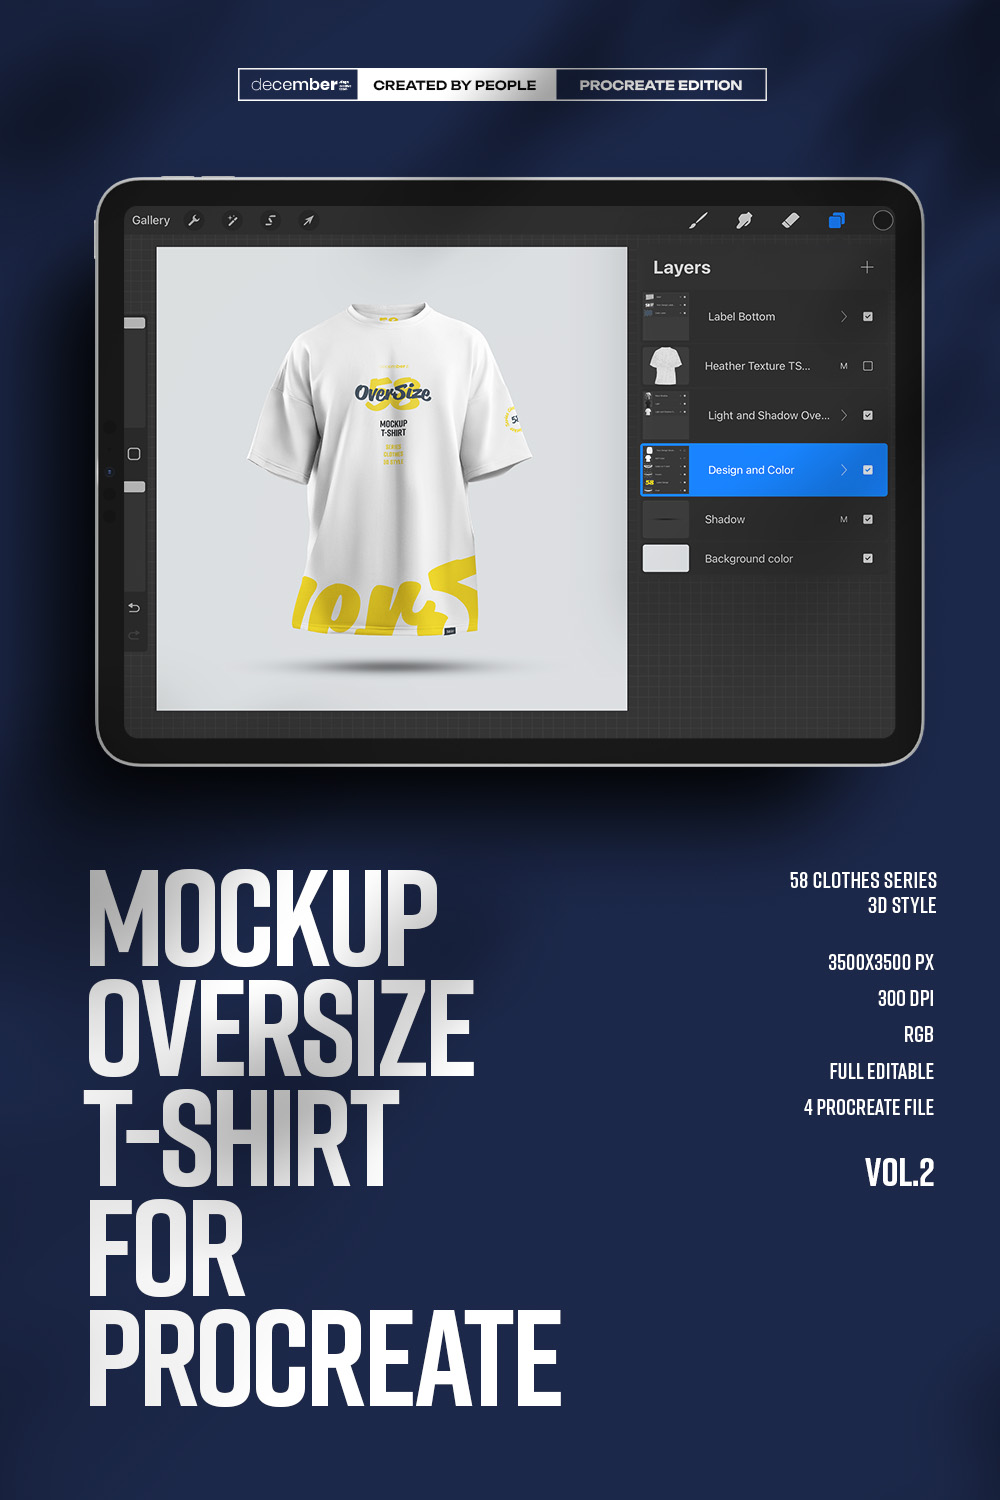 5 Mockups Oversize T-shirt for Procreate vol2 pinterest preview image.